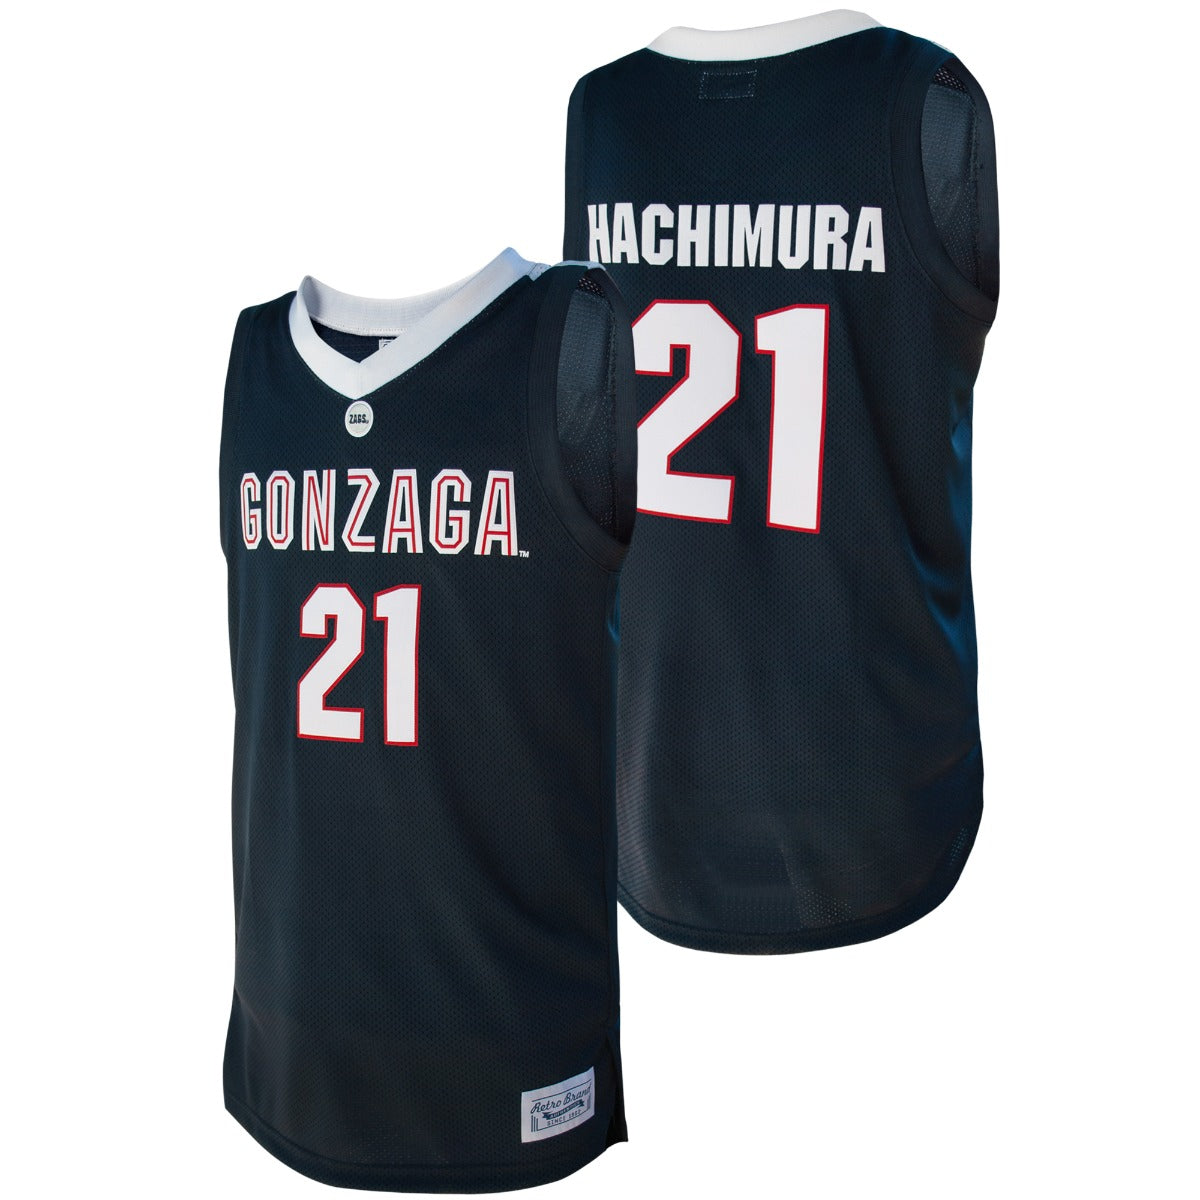 Gonzaga Bulldogs Rui Hachimura Throwback Jersey